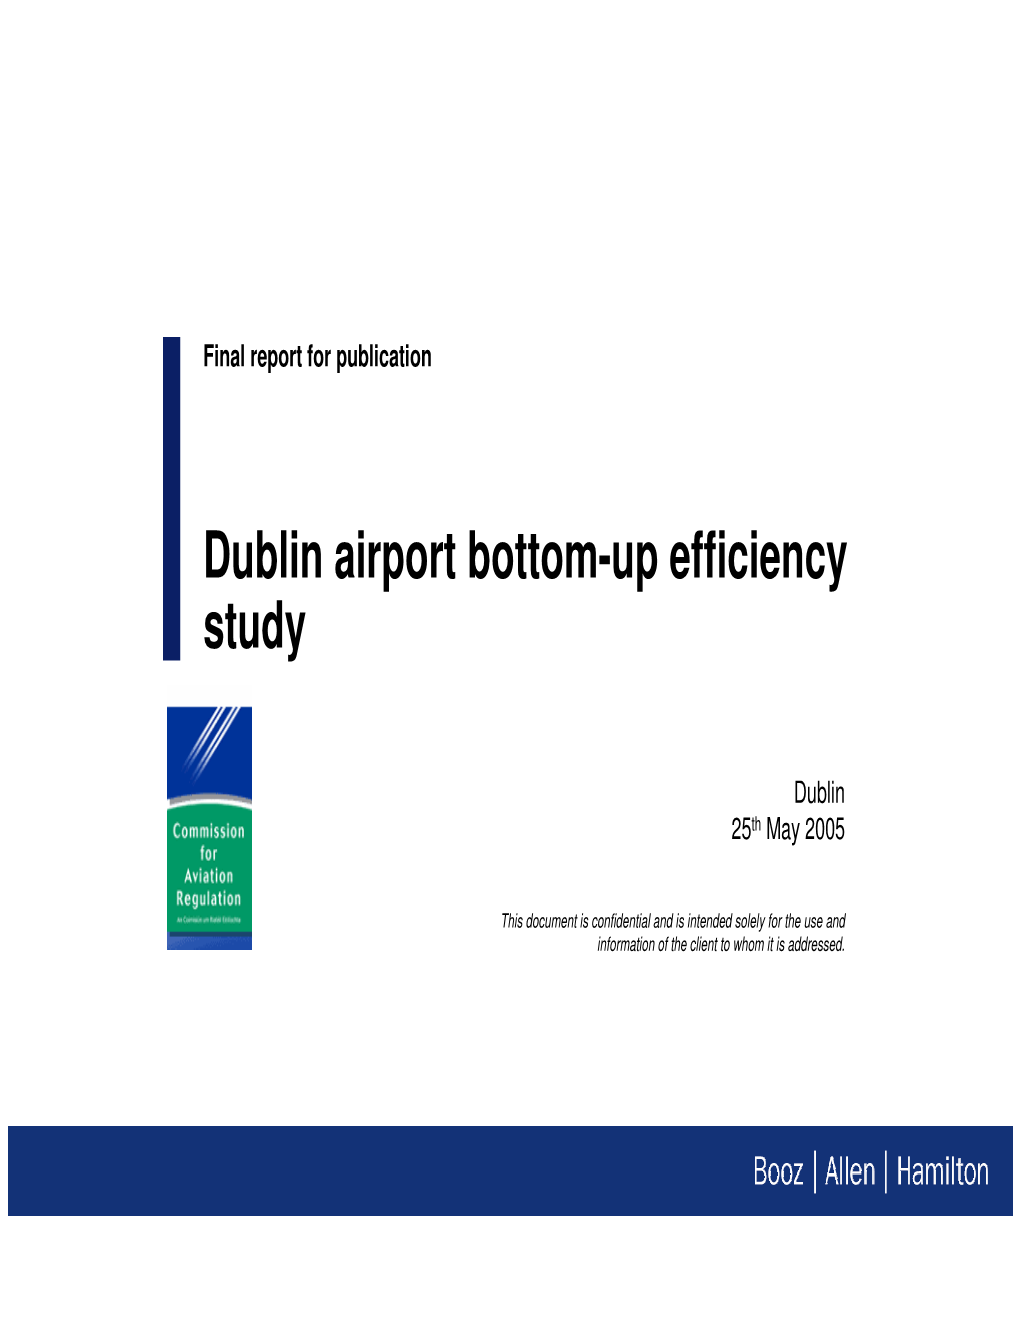 Dublin Airport Bottom-Up Efficiency Study